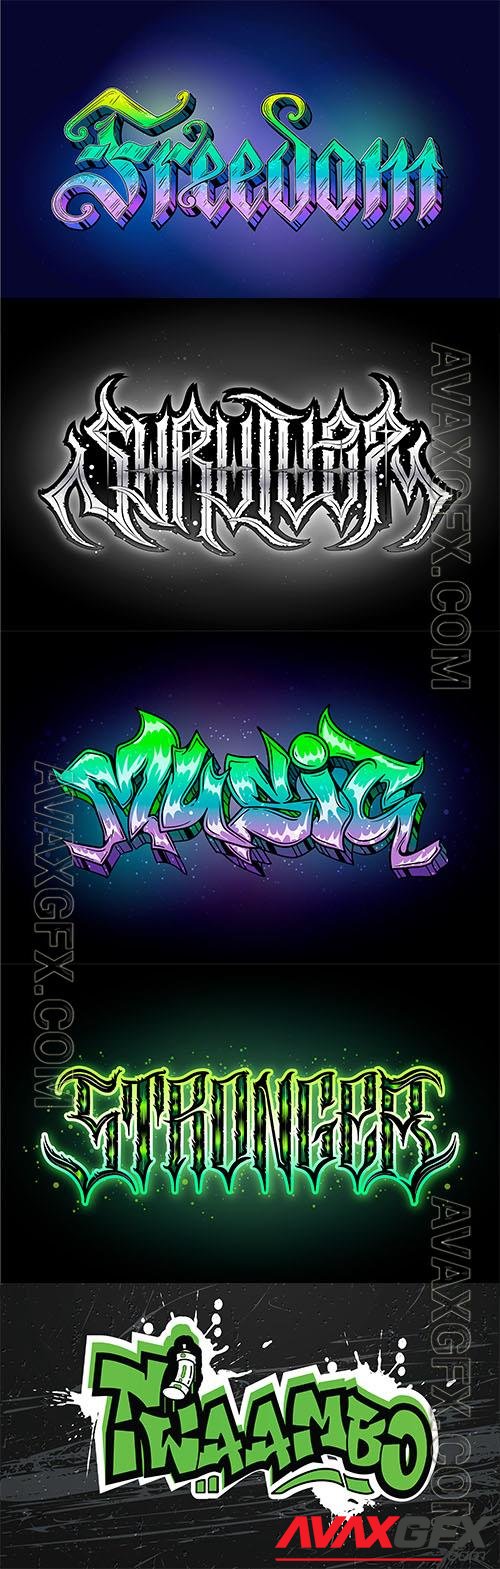 Creative hand drawn graffiti vector text effect